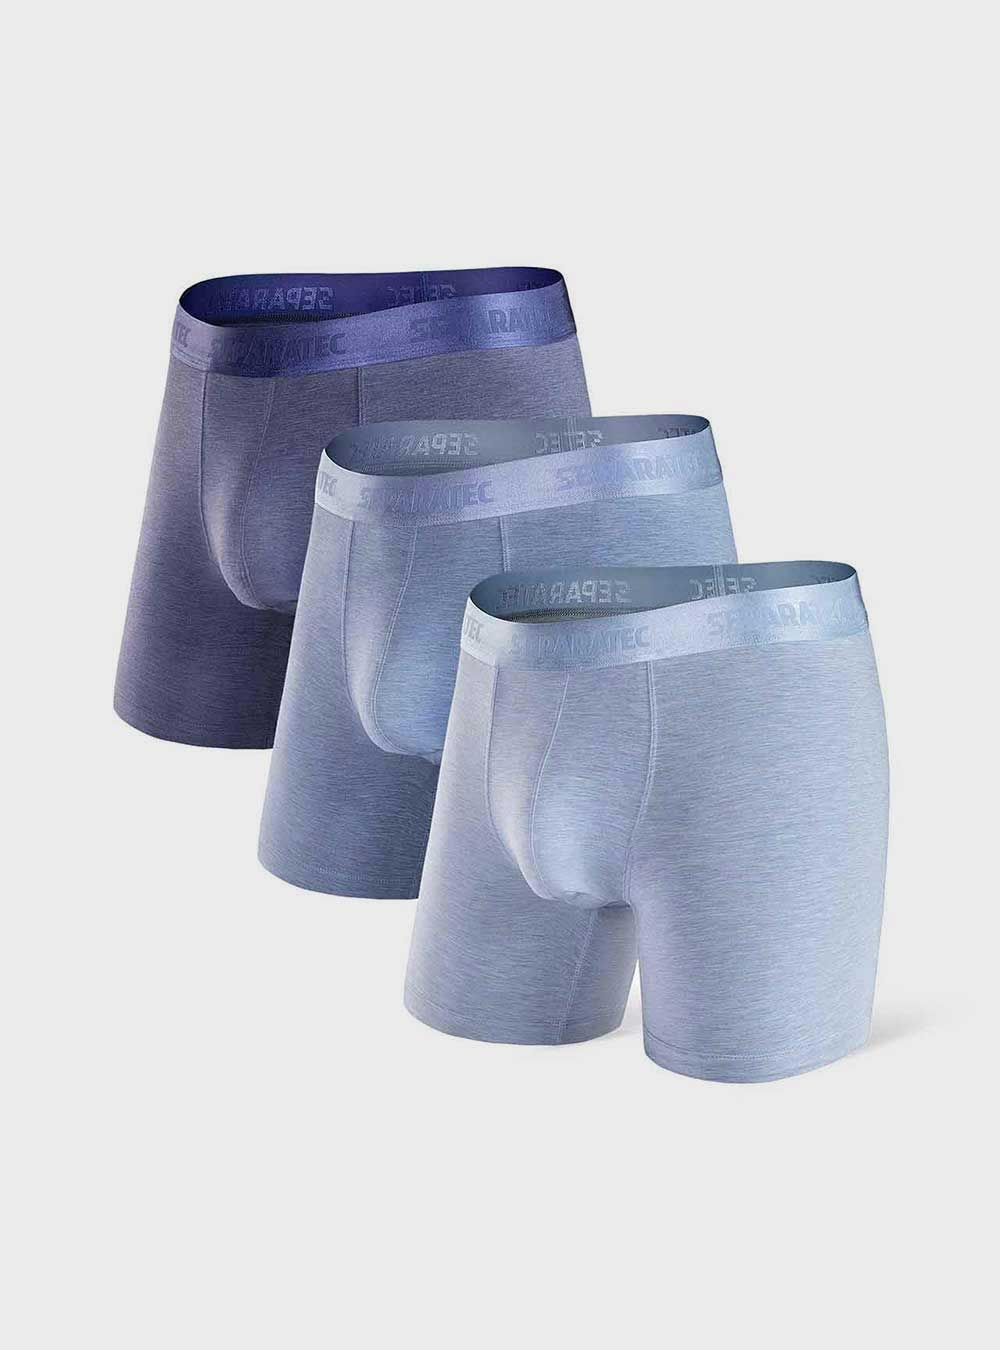 Separatec Men's High-end Micro Modal Dual Pouch Boxer Briefs Wedding  Underwear